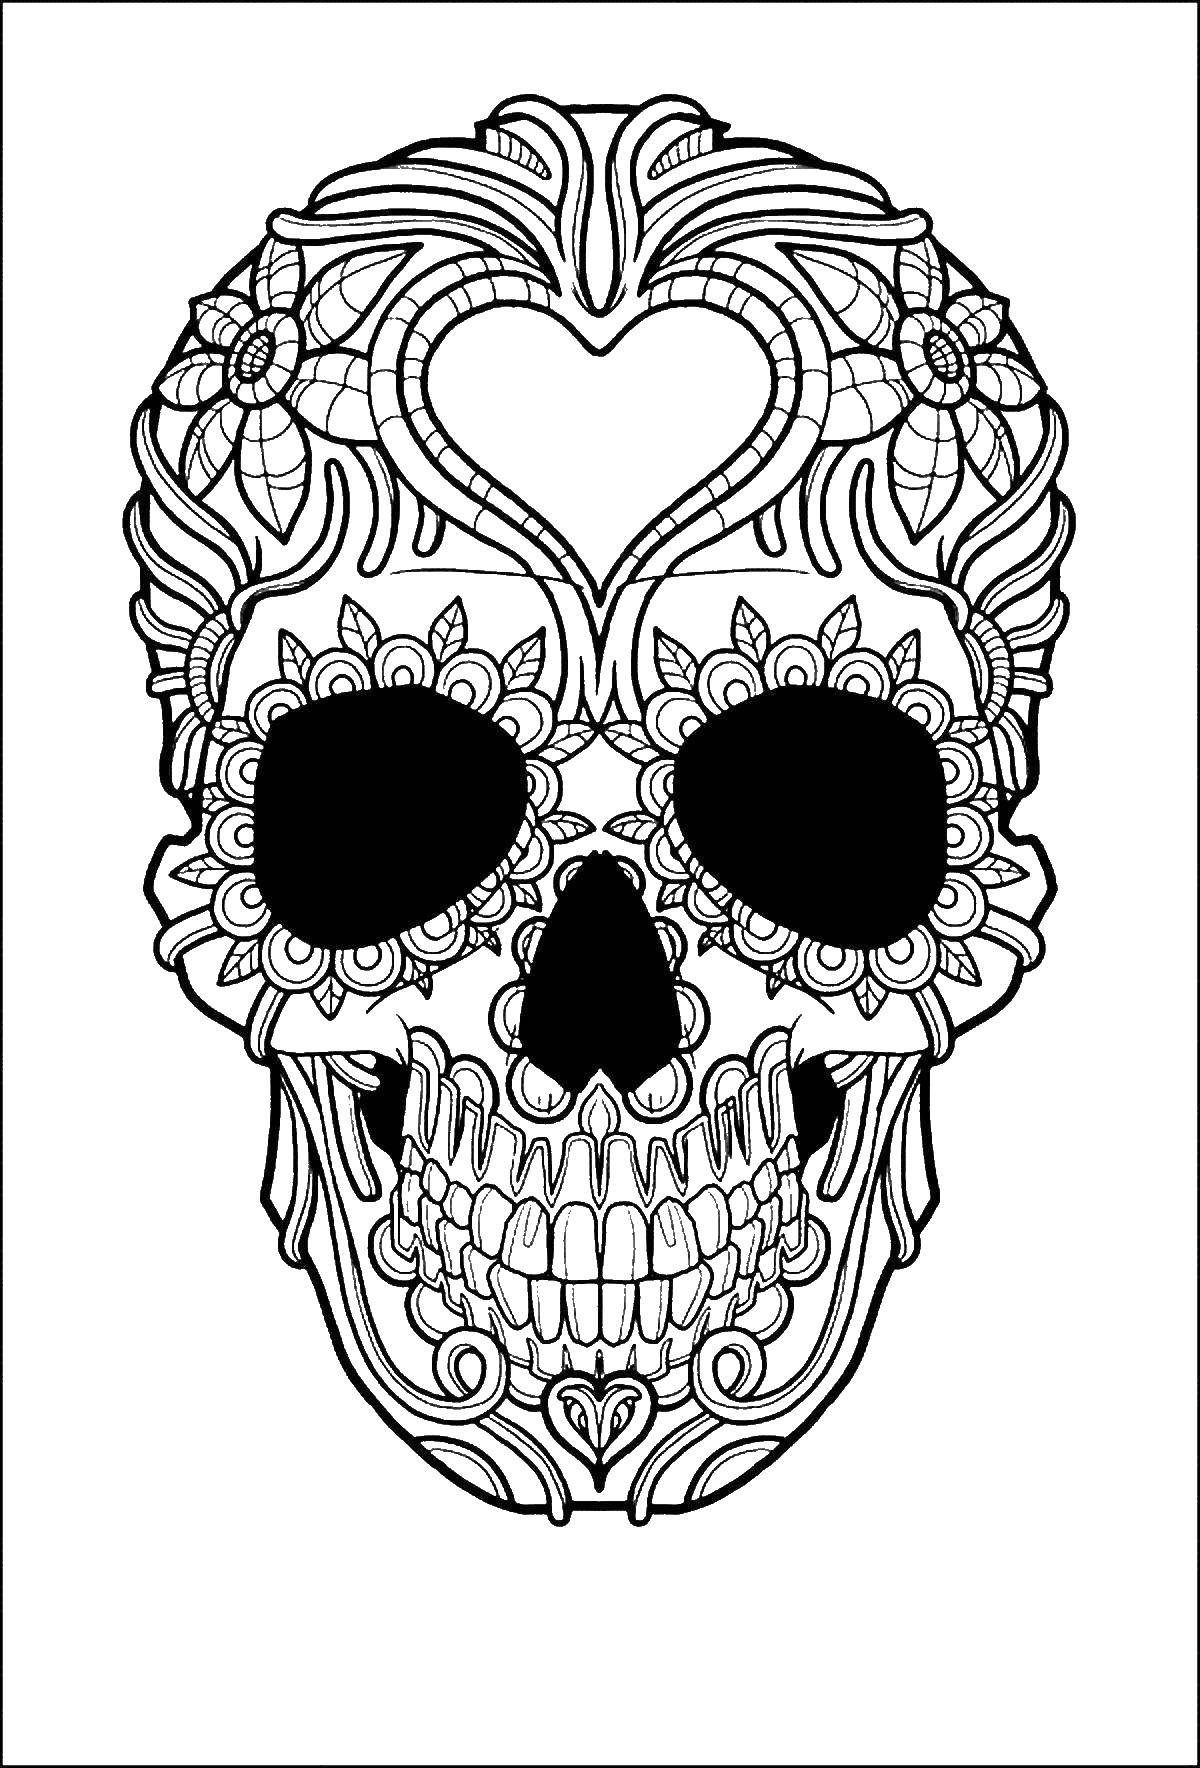 Coloring Patterned skull. Category Skull. Tags:  skull, patterns, flowers.